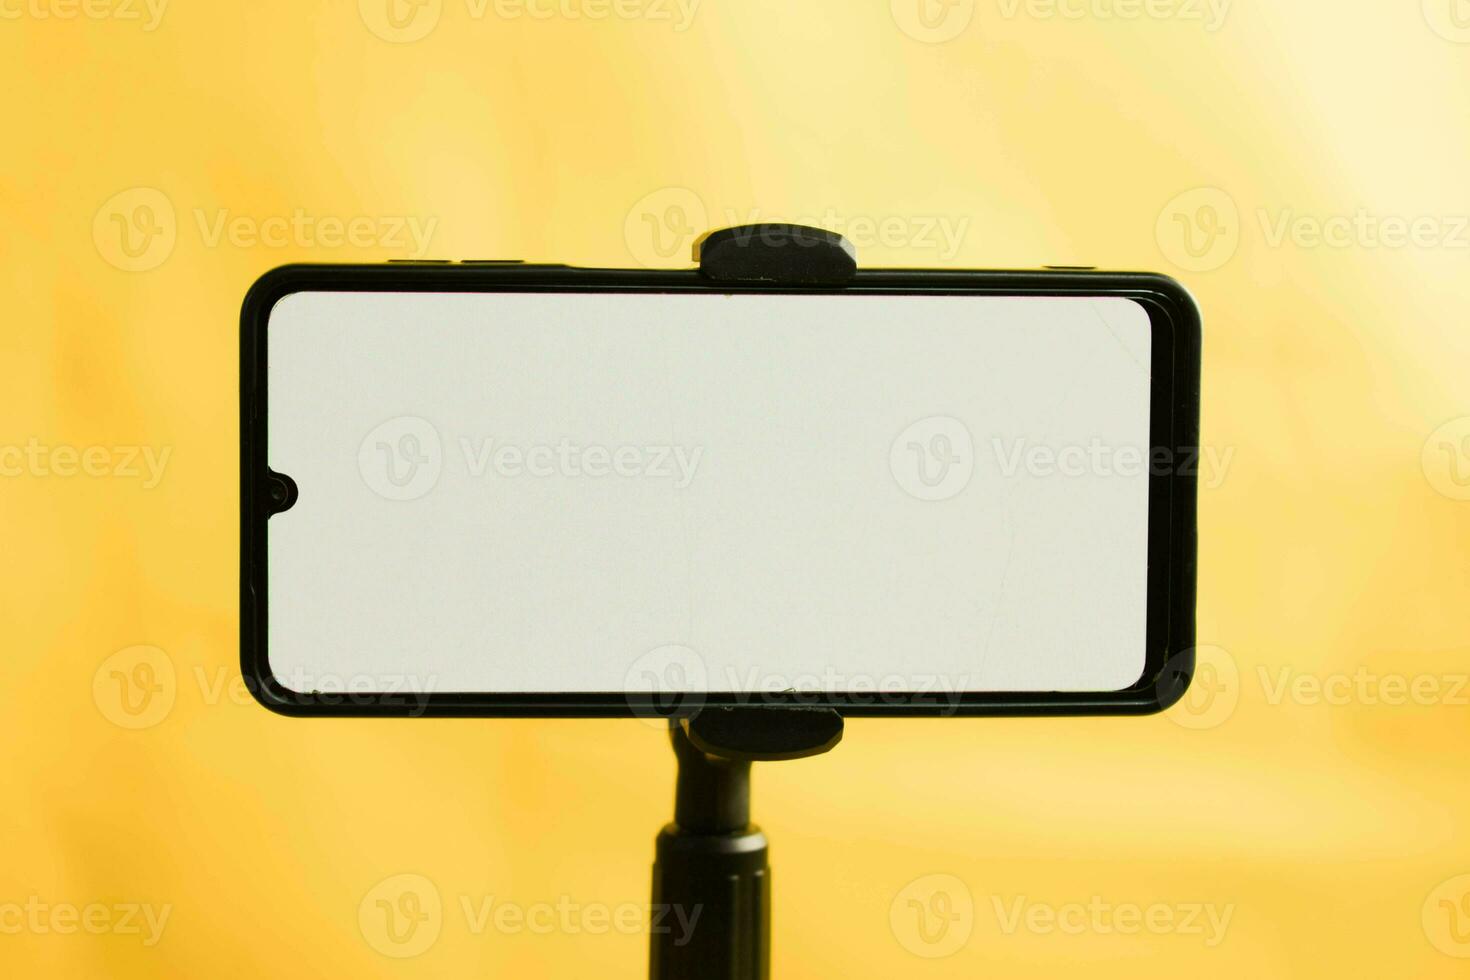 paisaje teléfono con blanco pantalla fijo a trípode en amarillo fondo, para Bosquejo diseño. foto